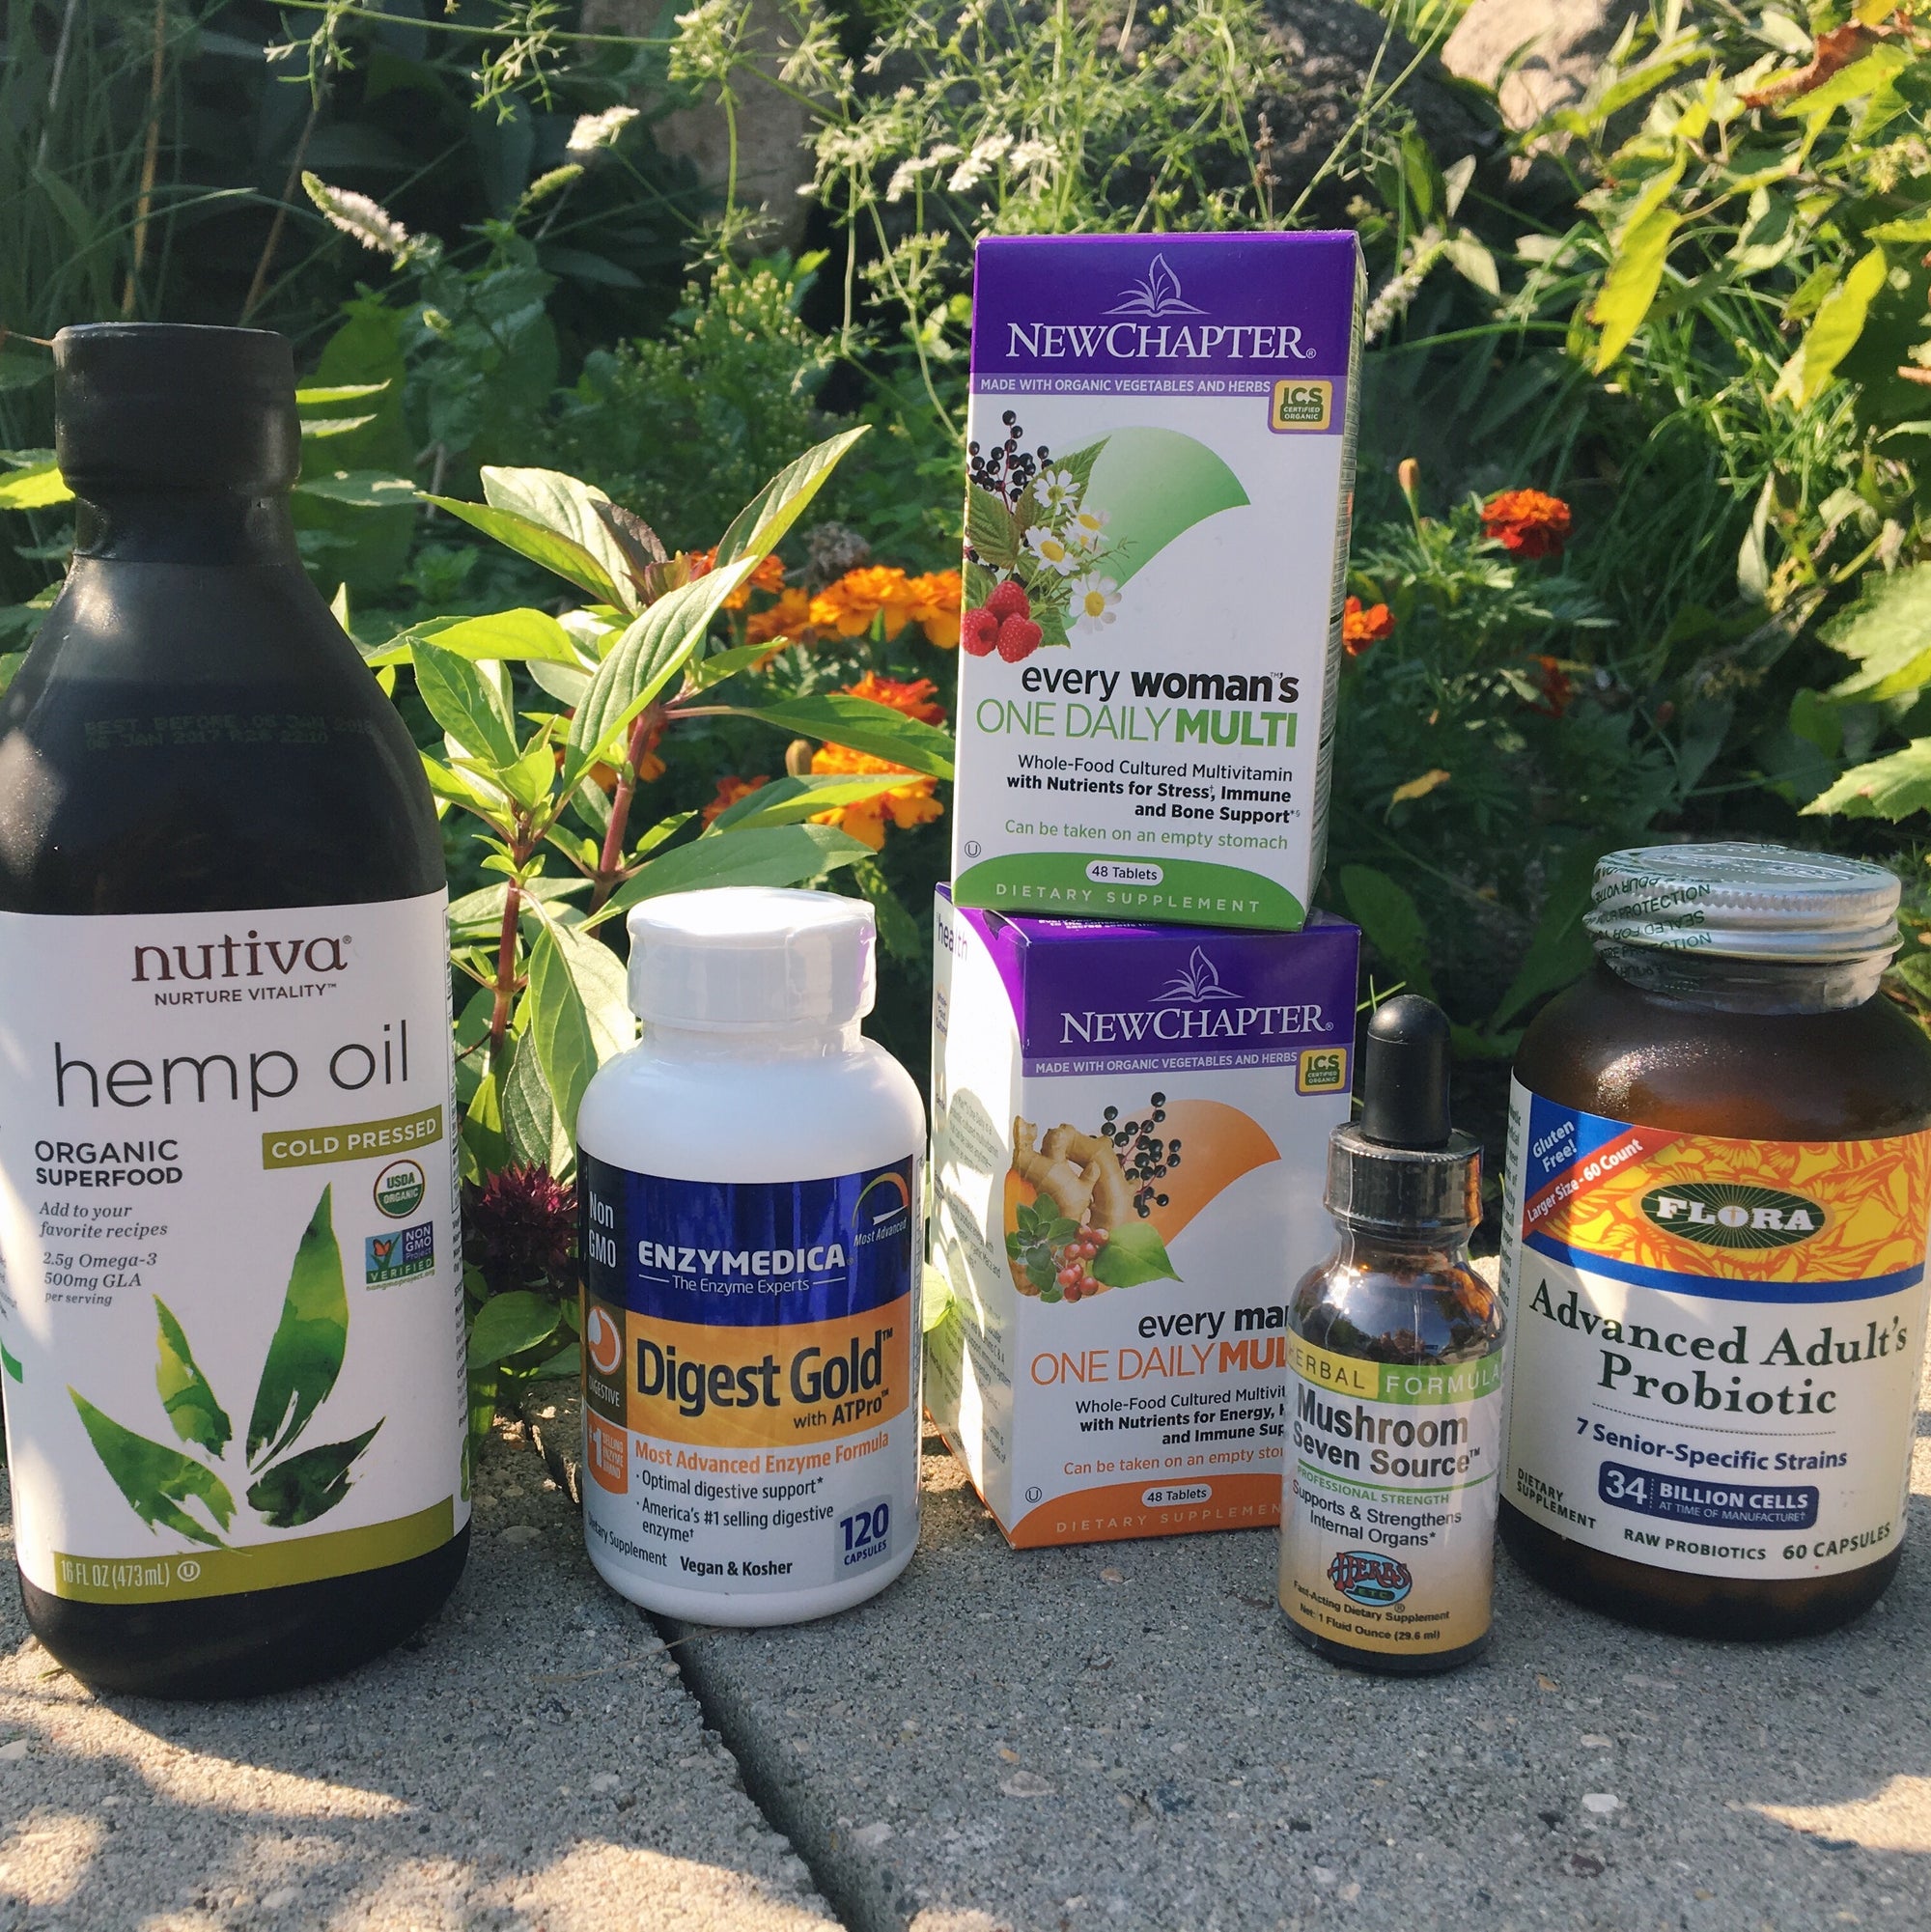 Supplements from Mastel's Health foods in a garden